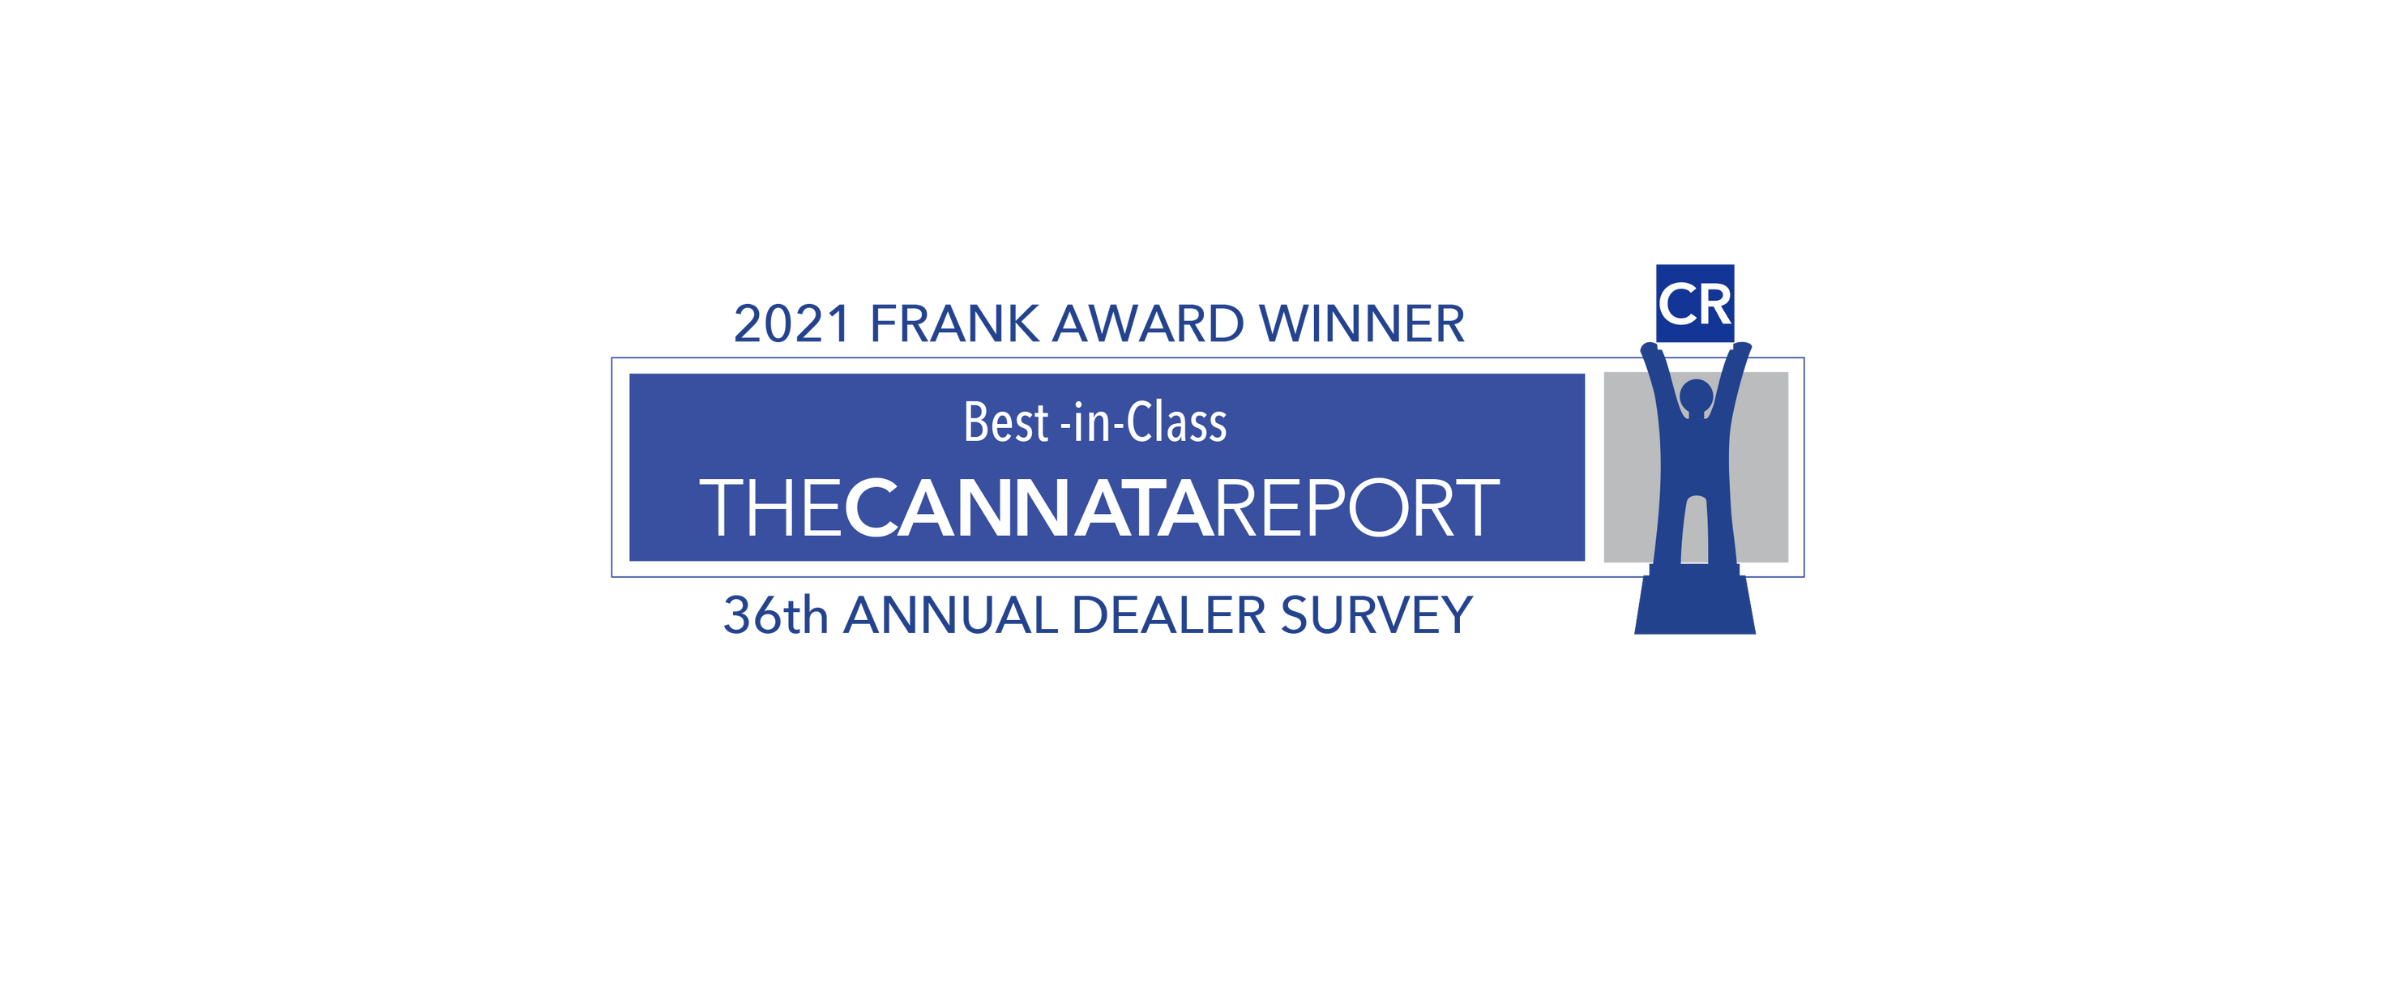 Cannata Report award logo for 2021